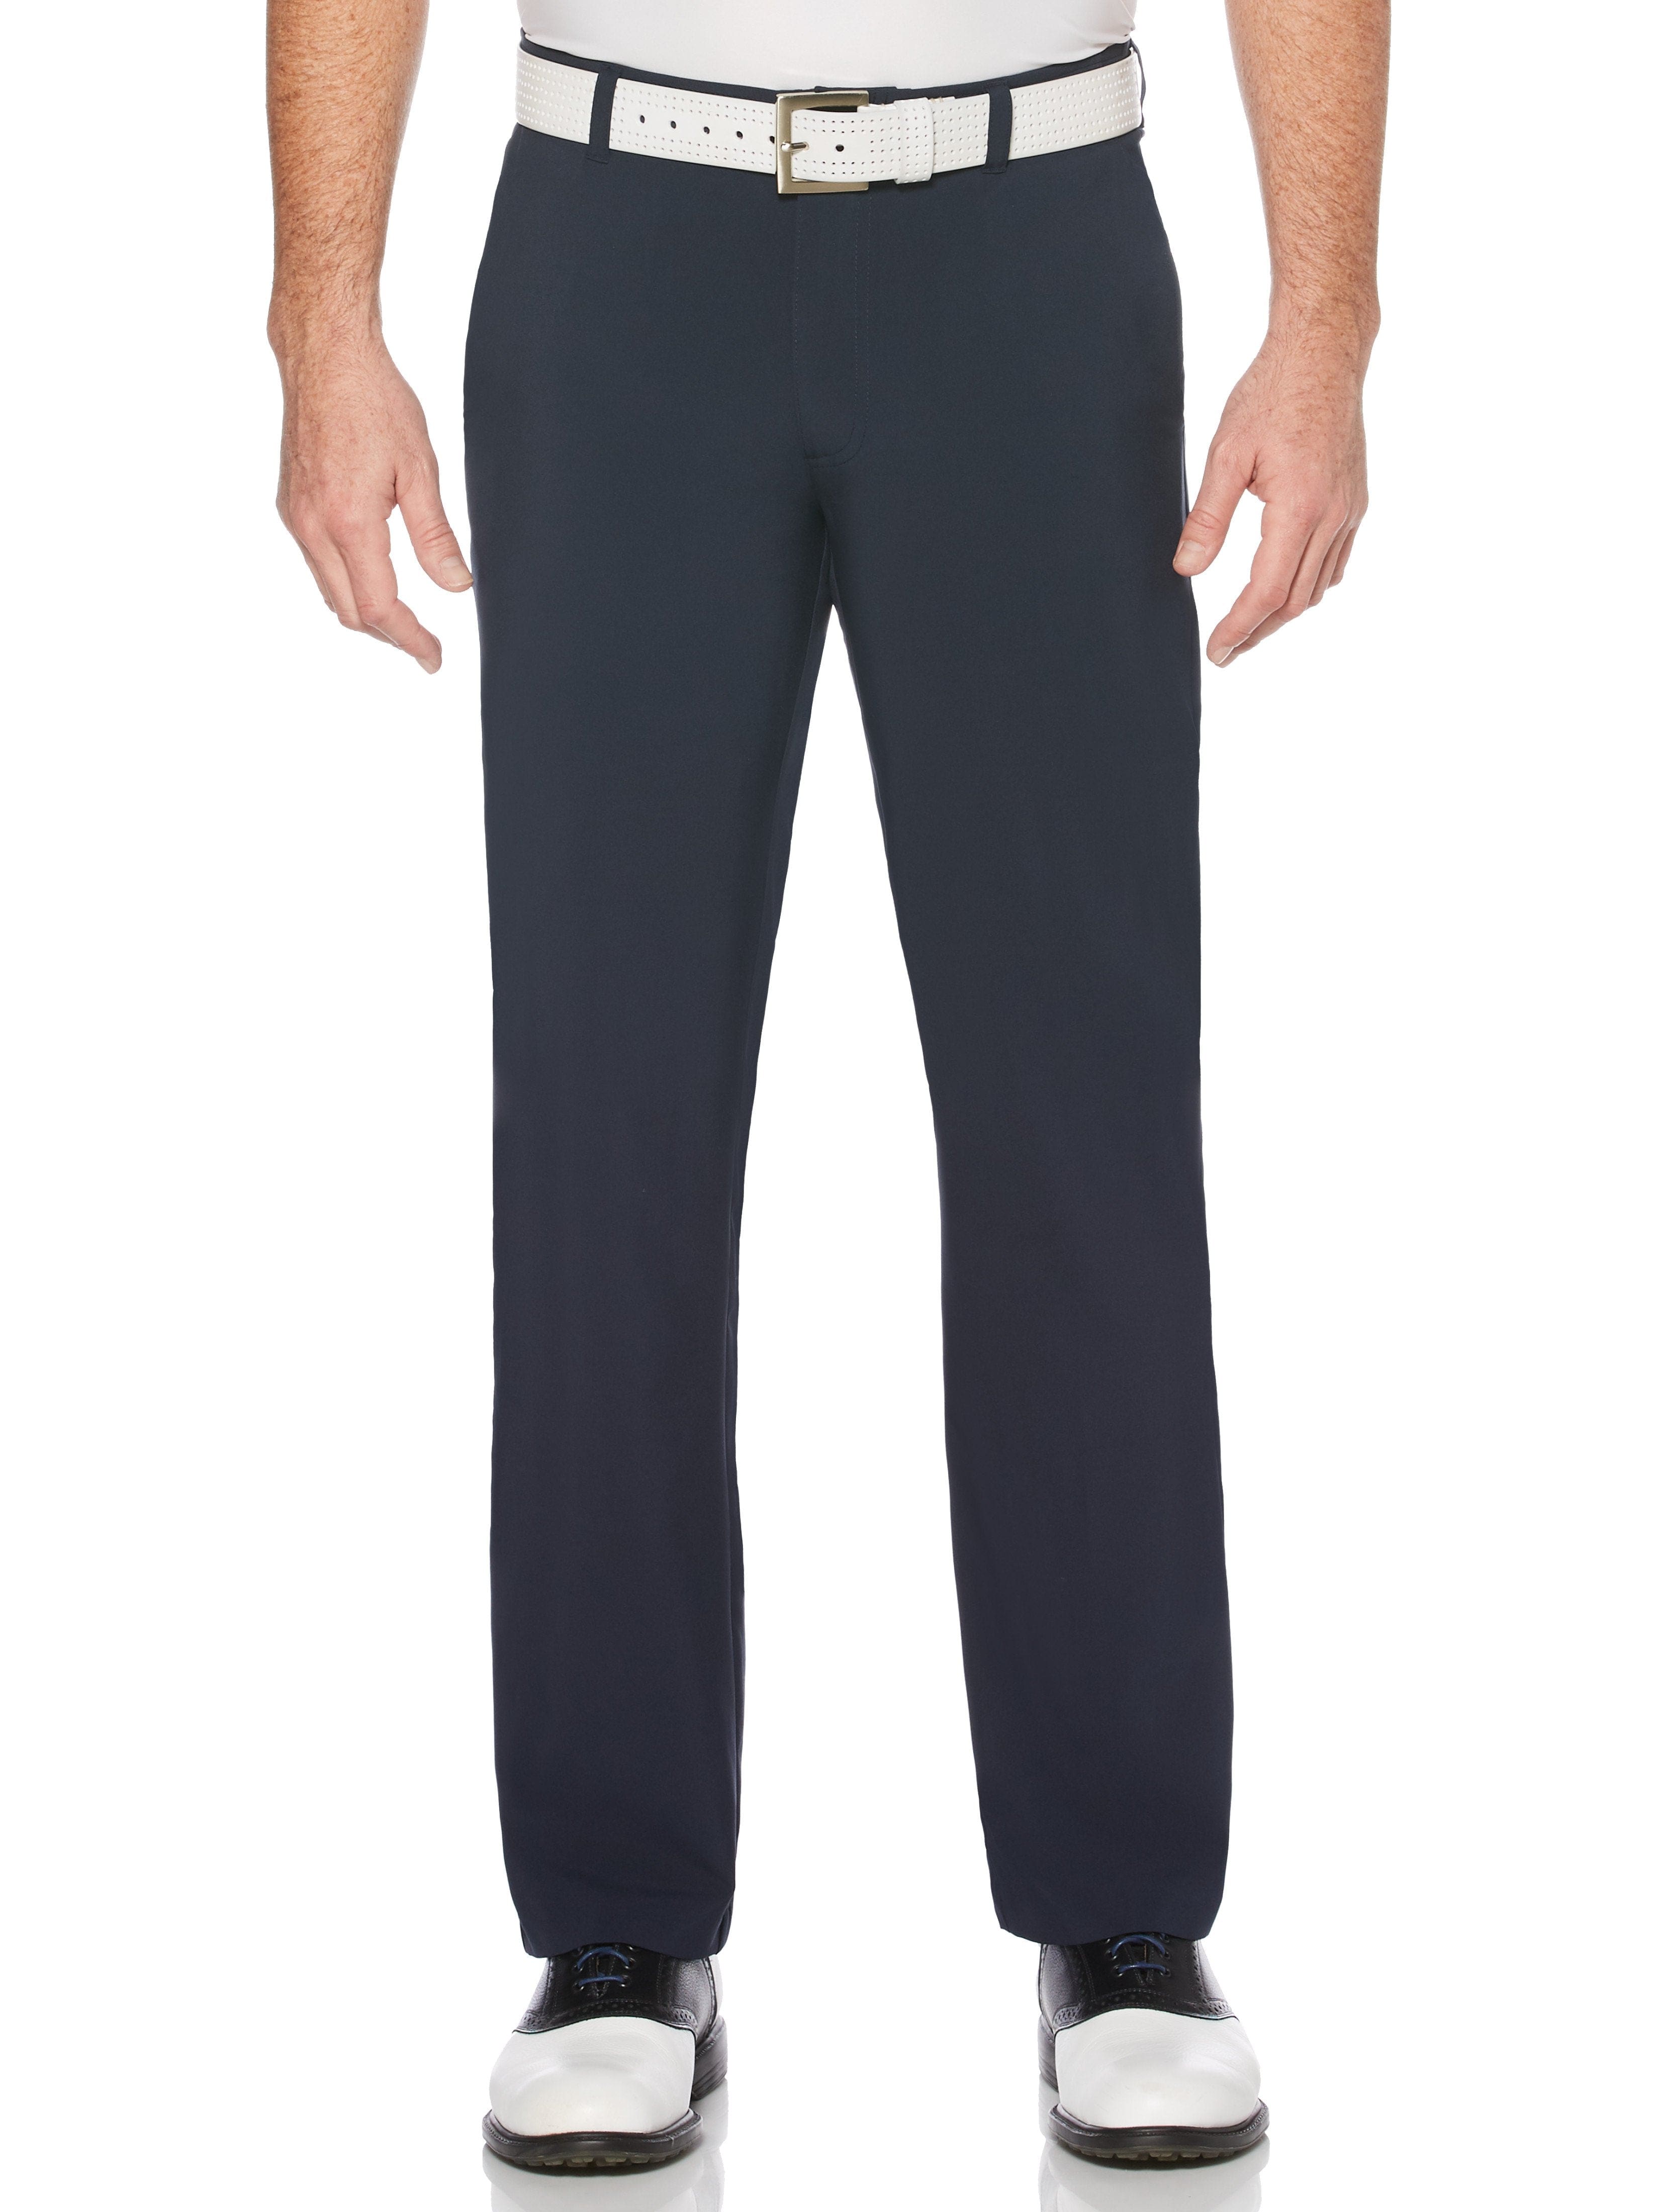 Jack Nicklaus Mens Flat Front Active Flex Pants, Size 34 x 34, Classic Navy Blue, Polyester/Elastane | Golf Apparel Shop